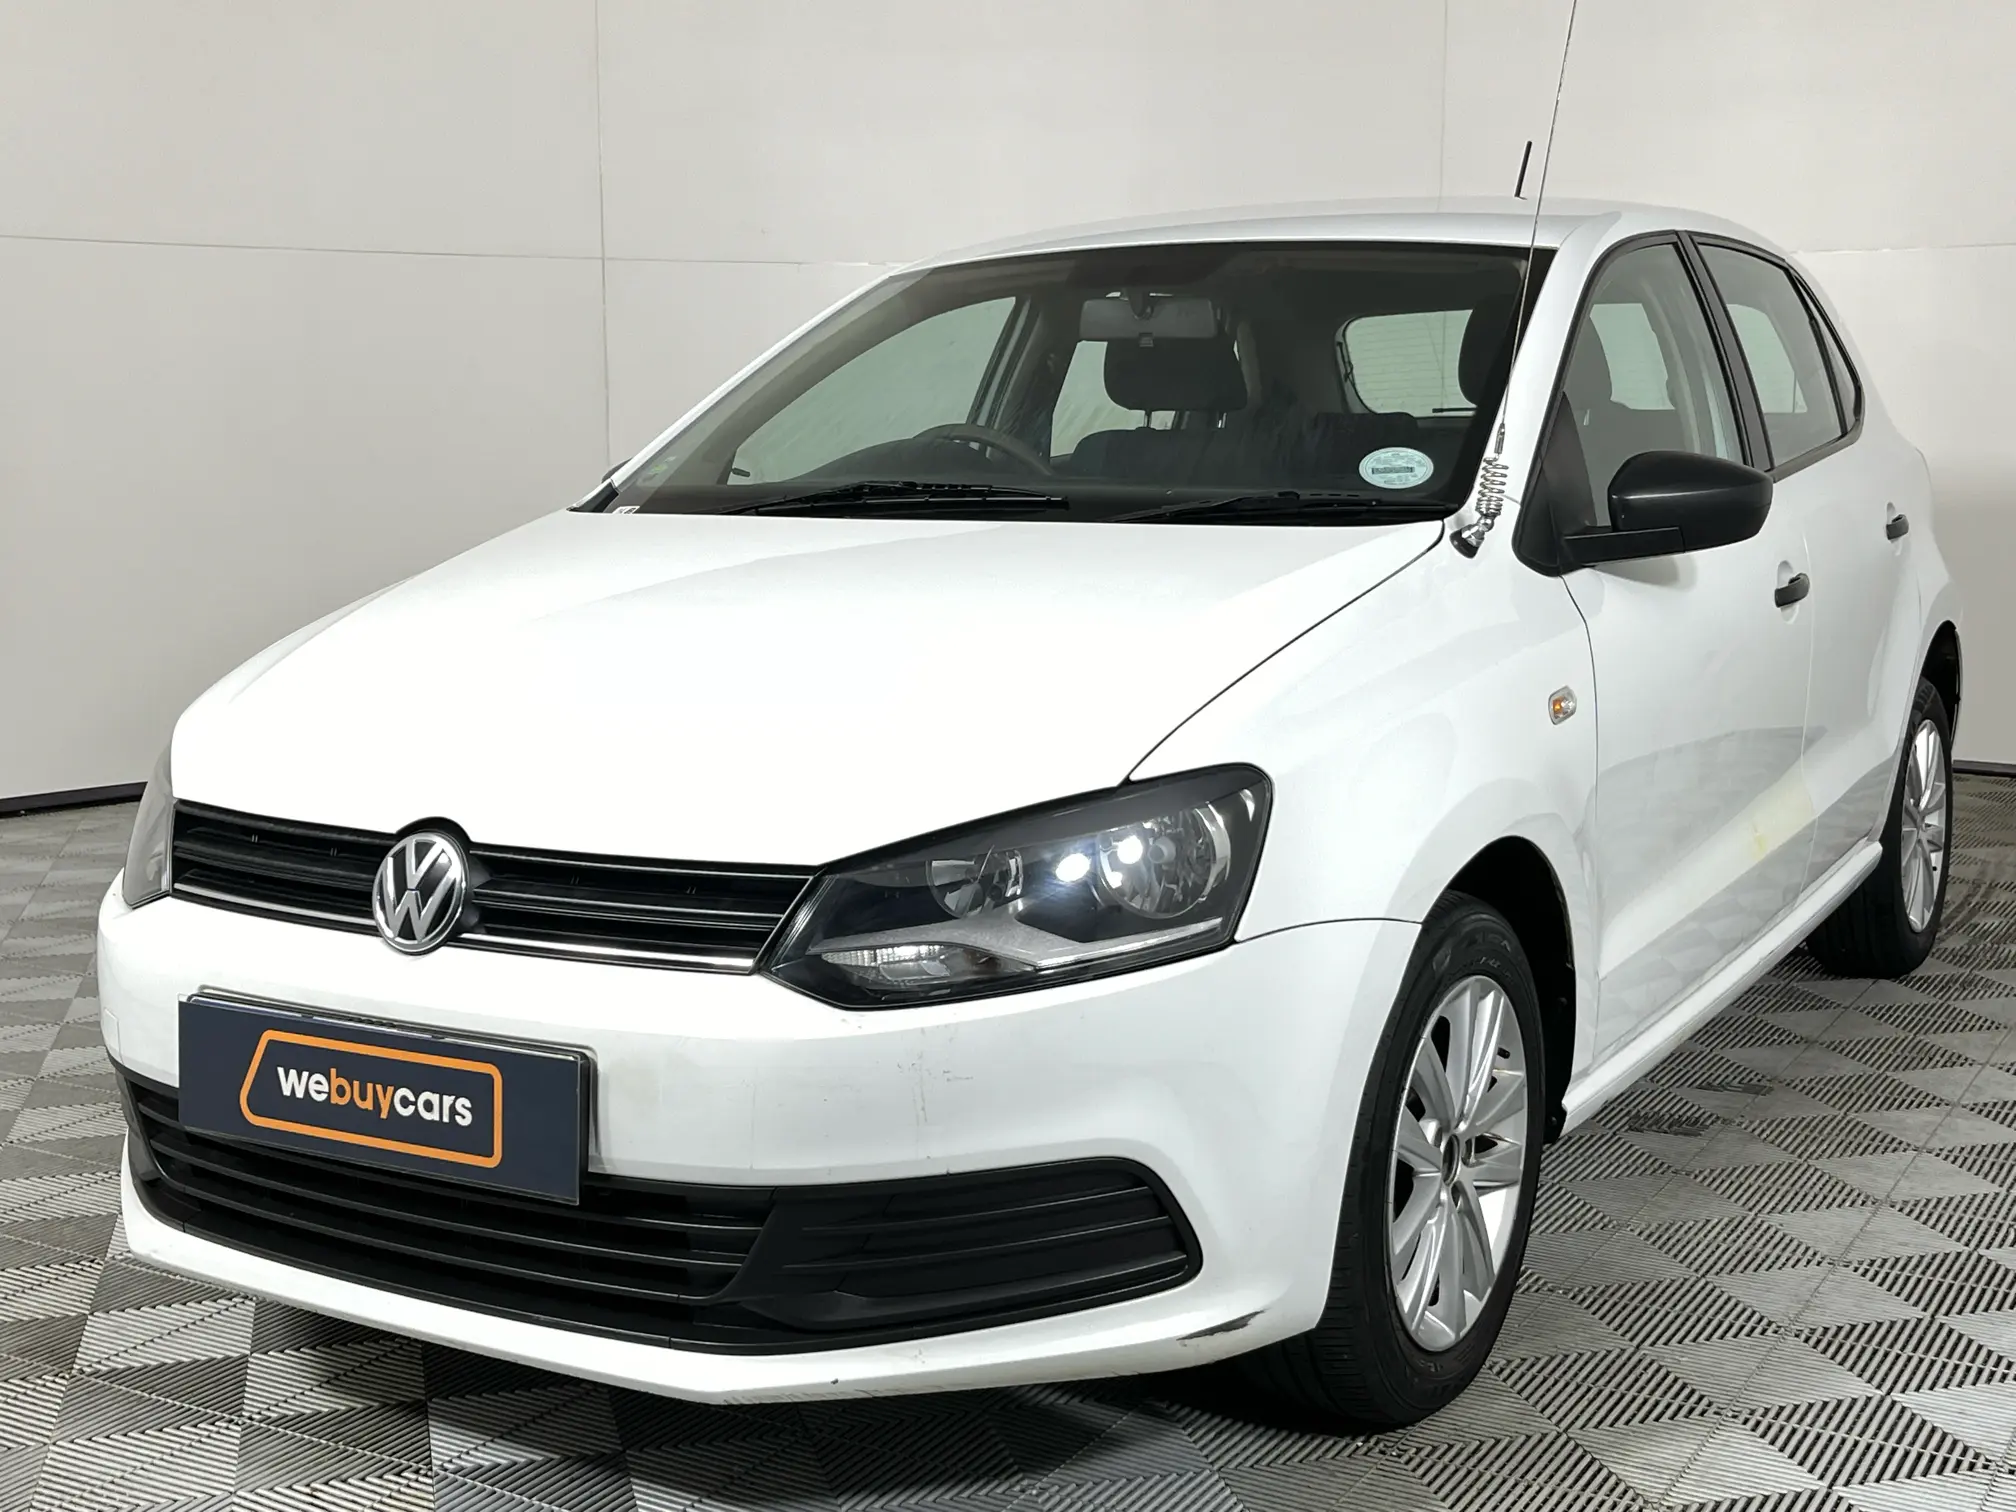 2019 Volkswagen Polo Vivo 1.4 Trendline (5dr)